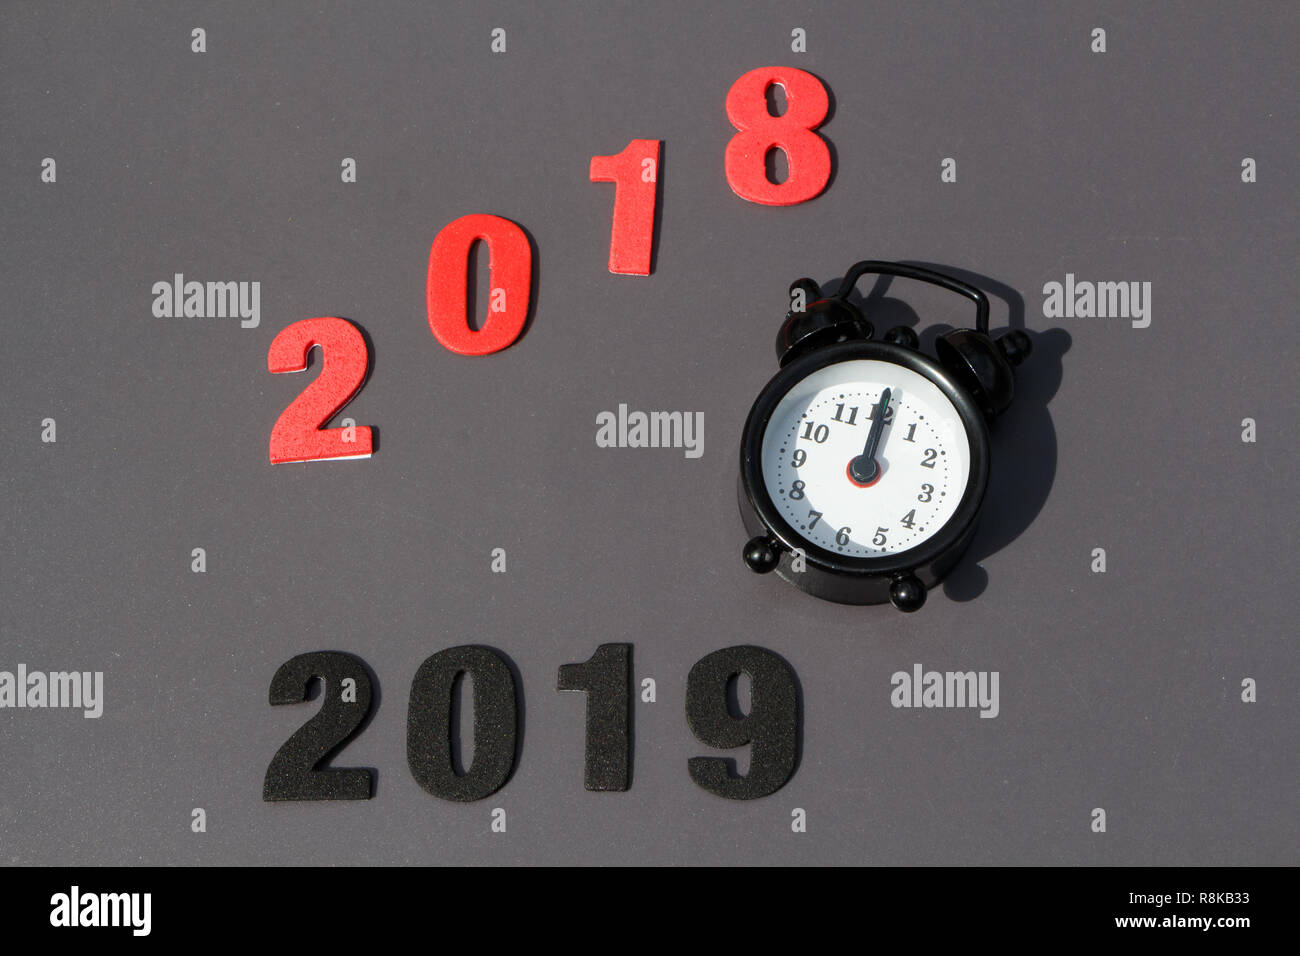 2018, 2019 and black vintage alarm clock on gray background Stock Photo